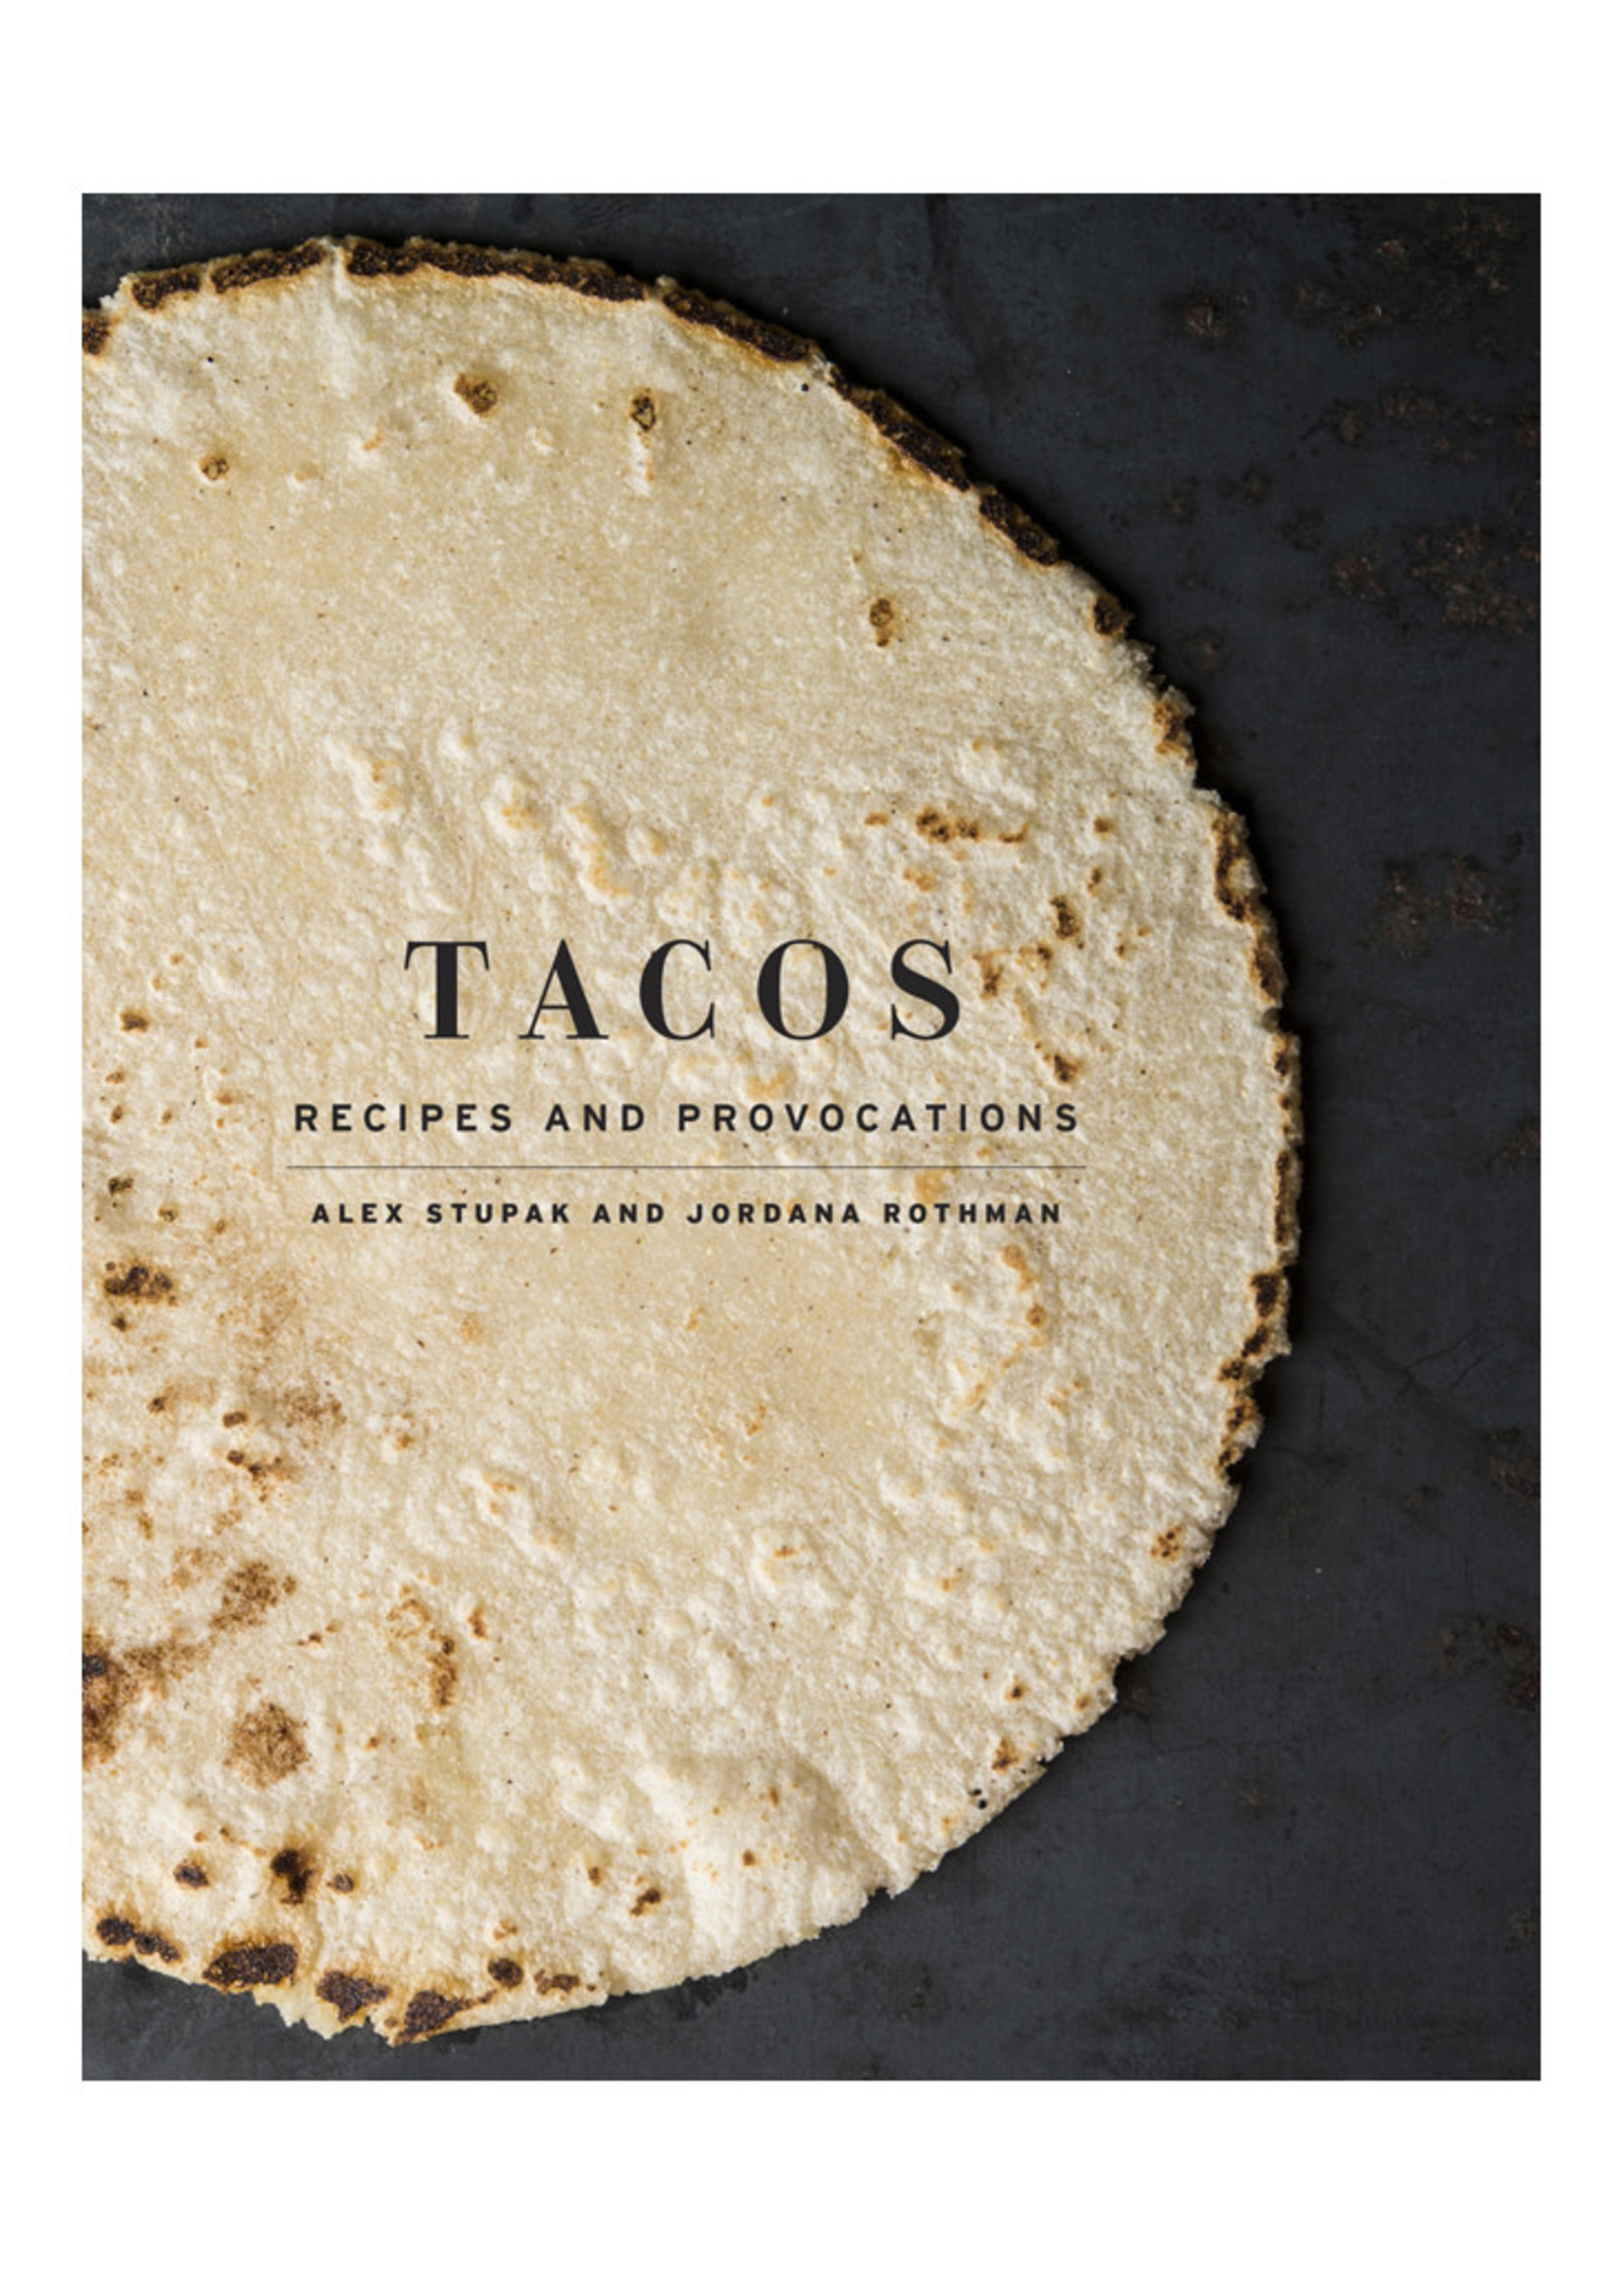 Tacos: Recipes and Provocations Cookbook